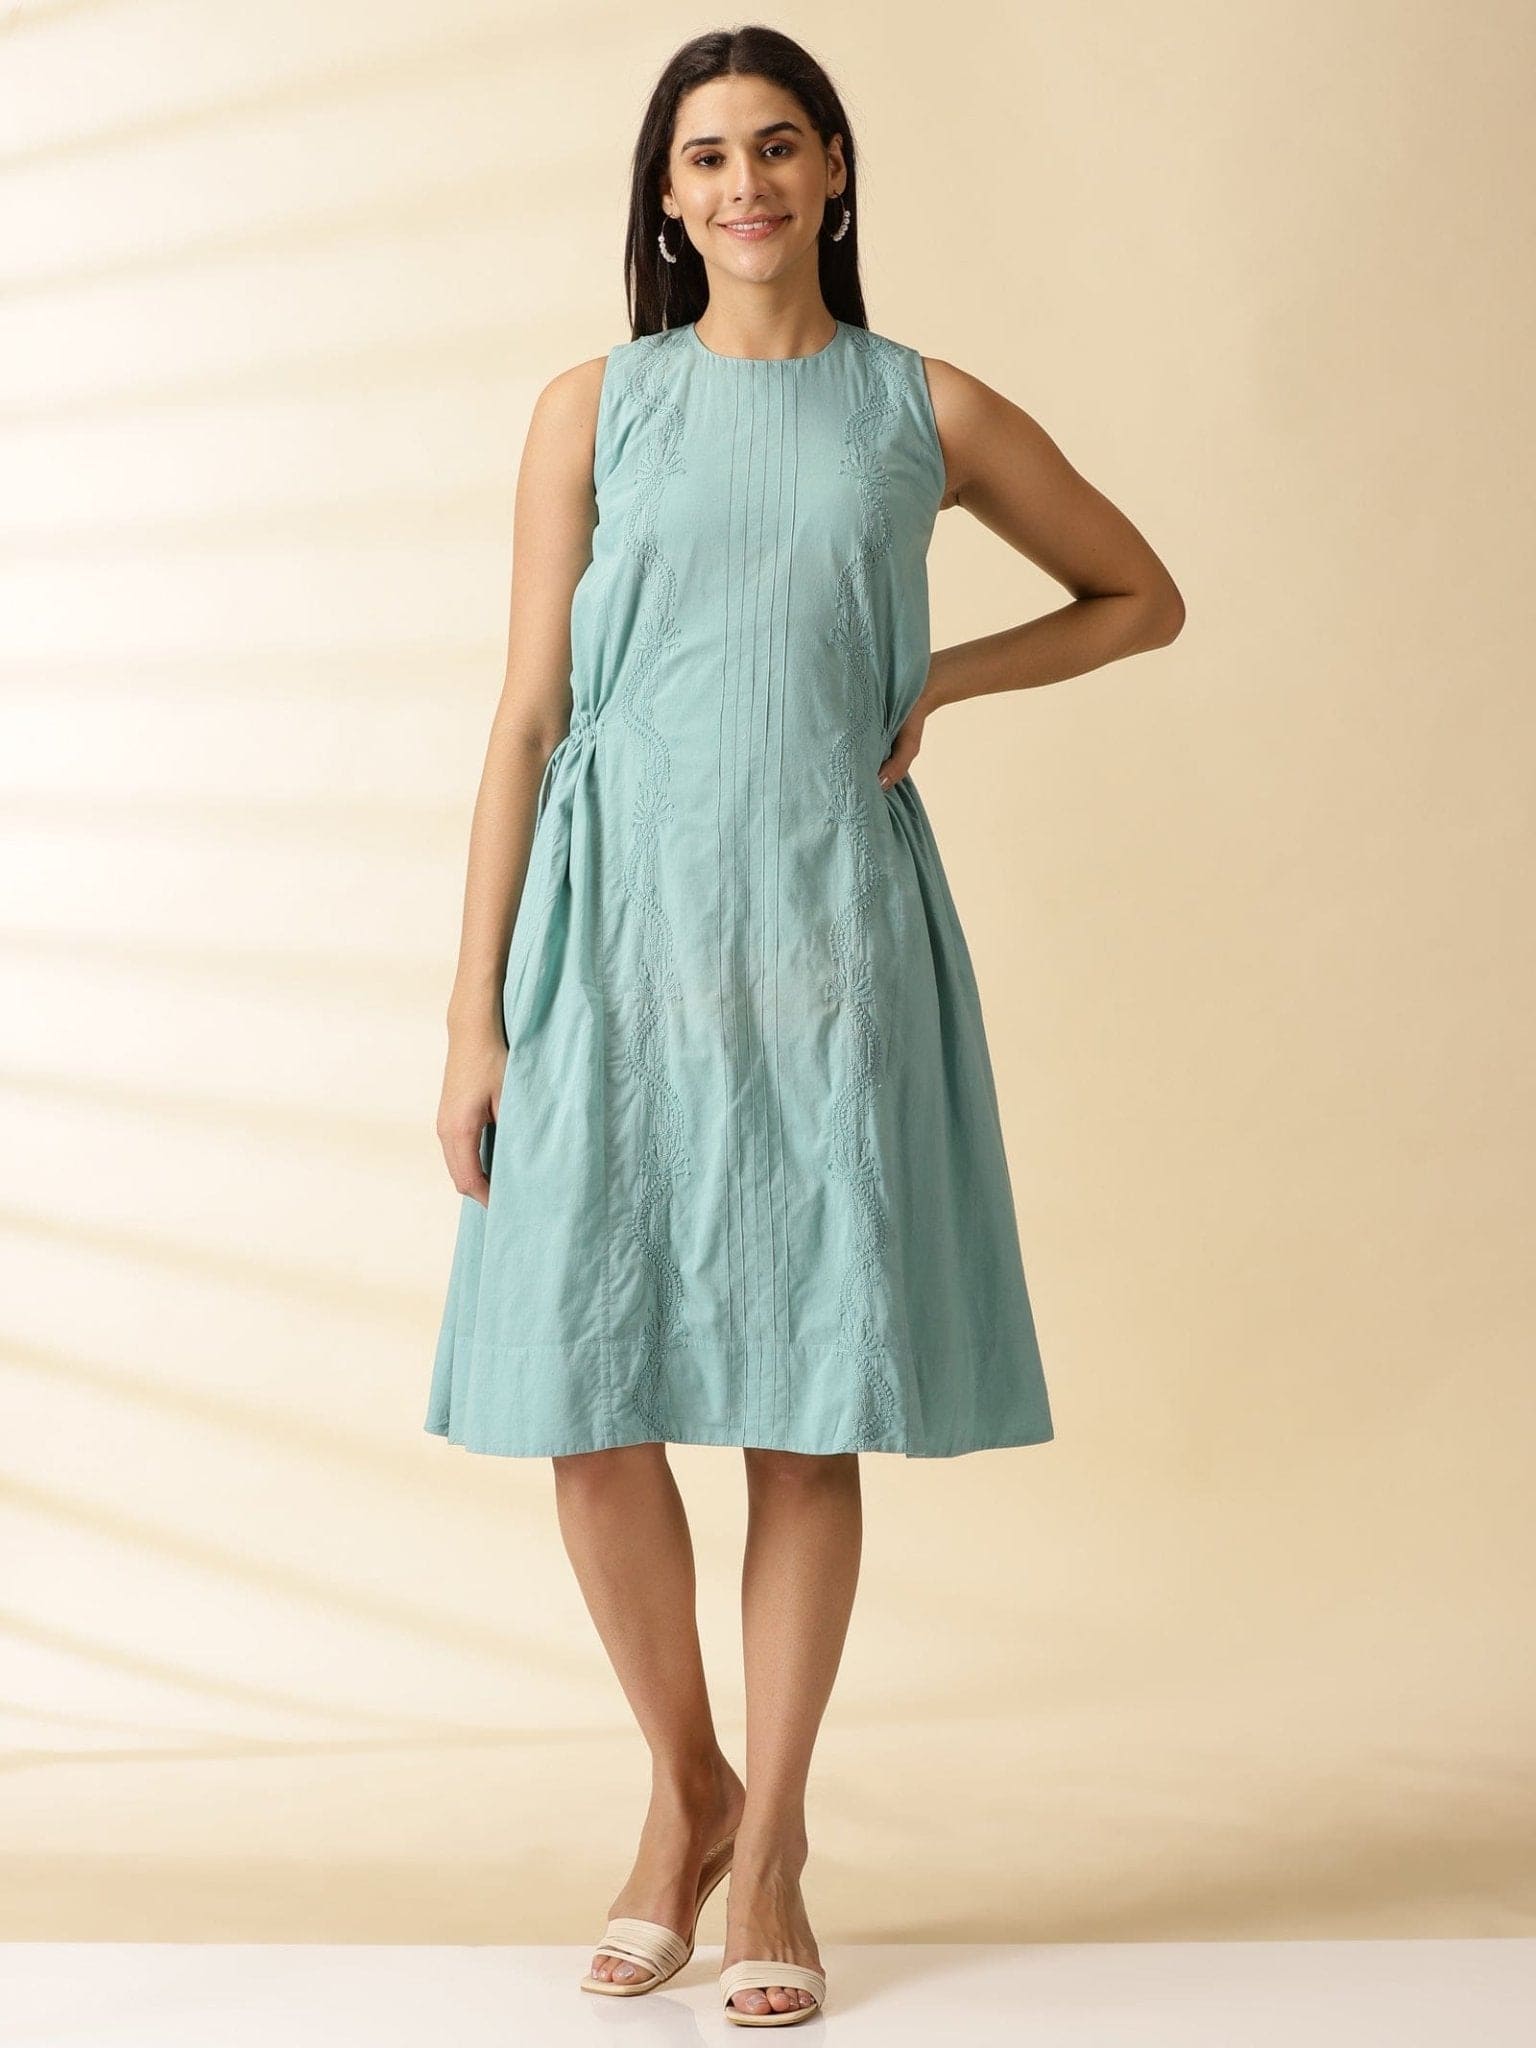 Turquoise Chikankari Cotton Dress - Charkha TalesTurquoise Chikankari Cotton Dress